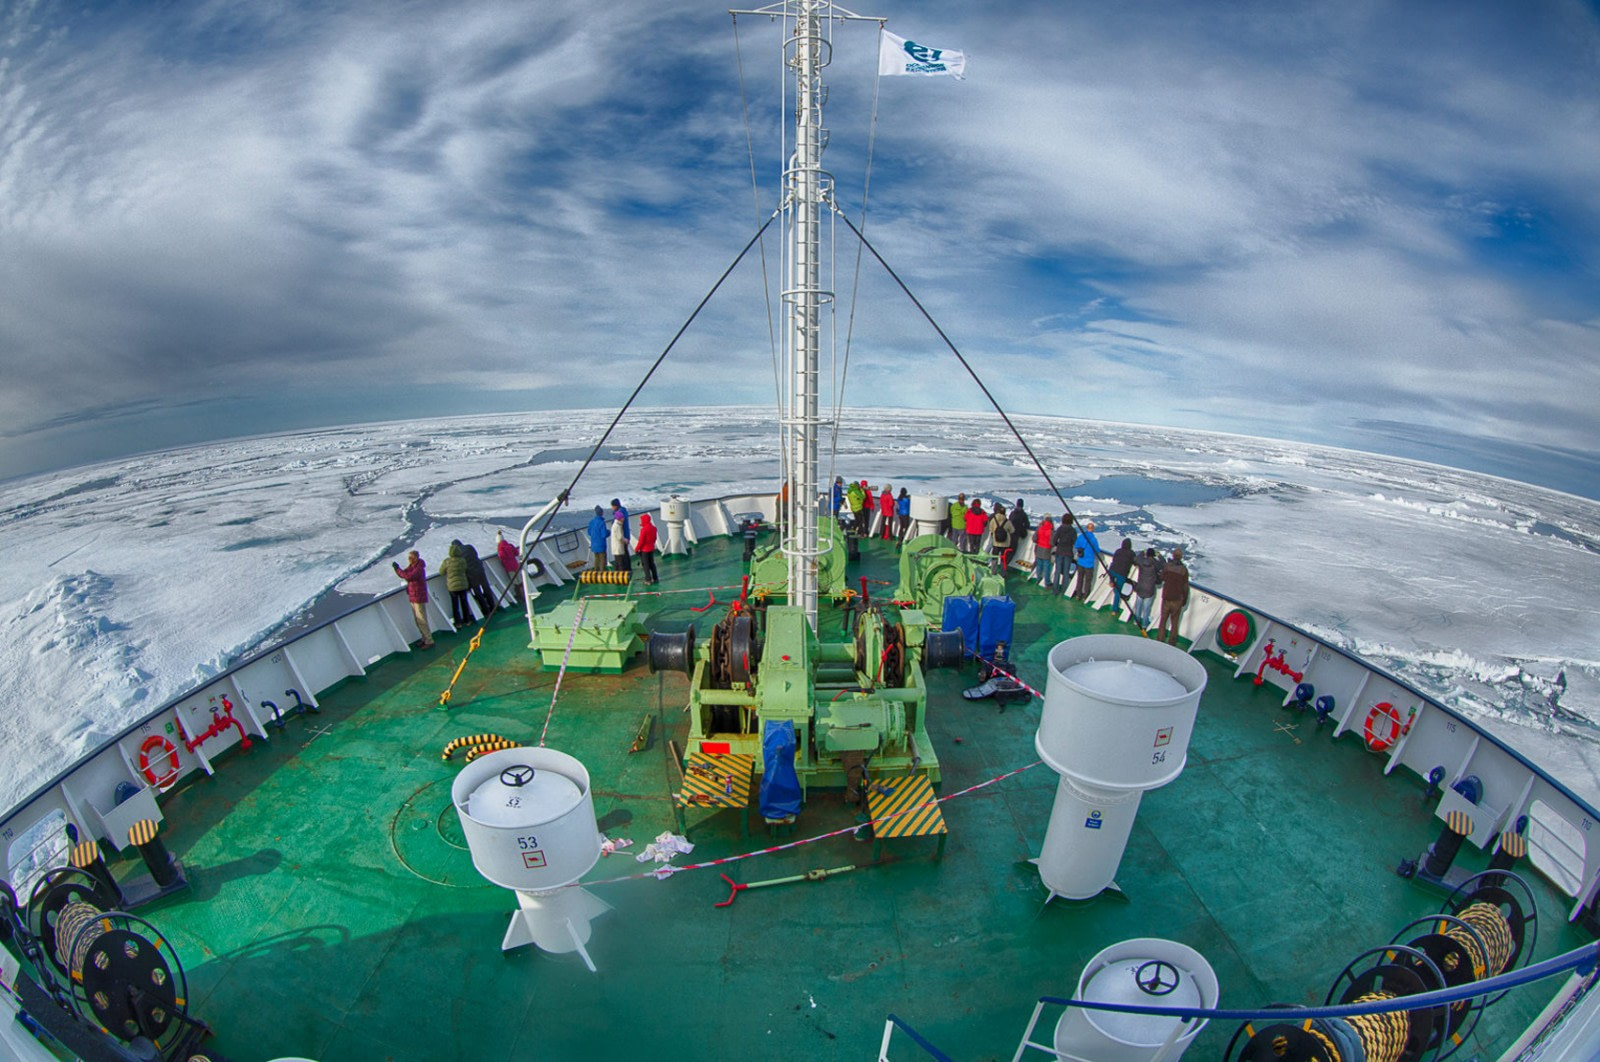 Ortelius in pack ice, Spitsbergen